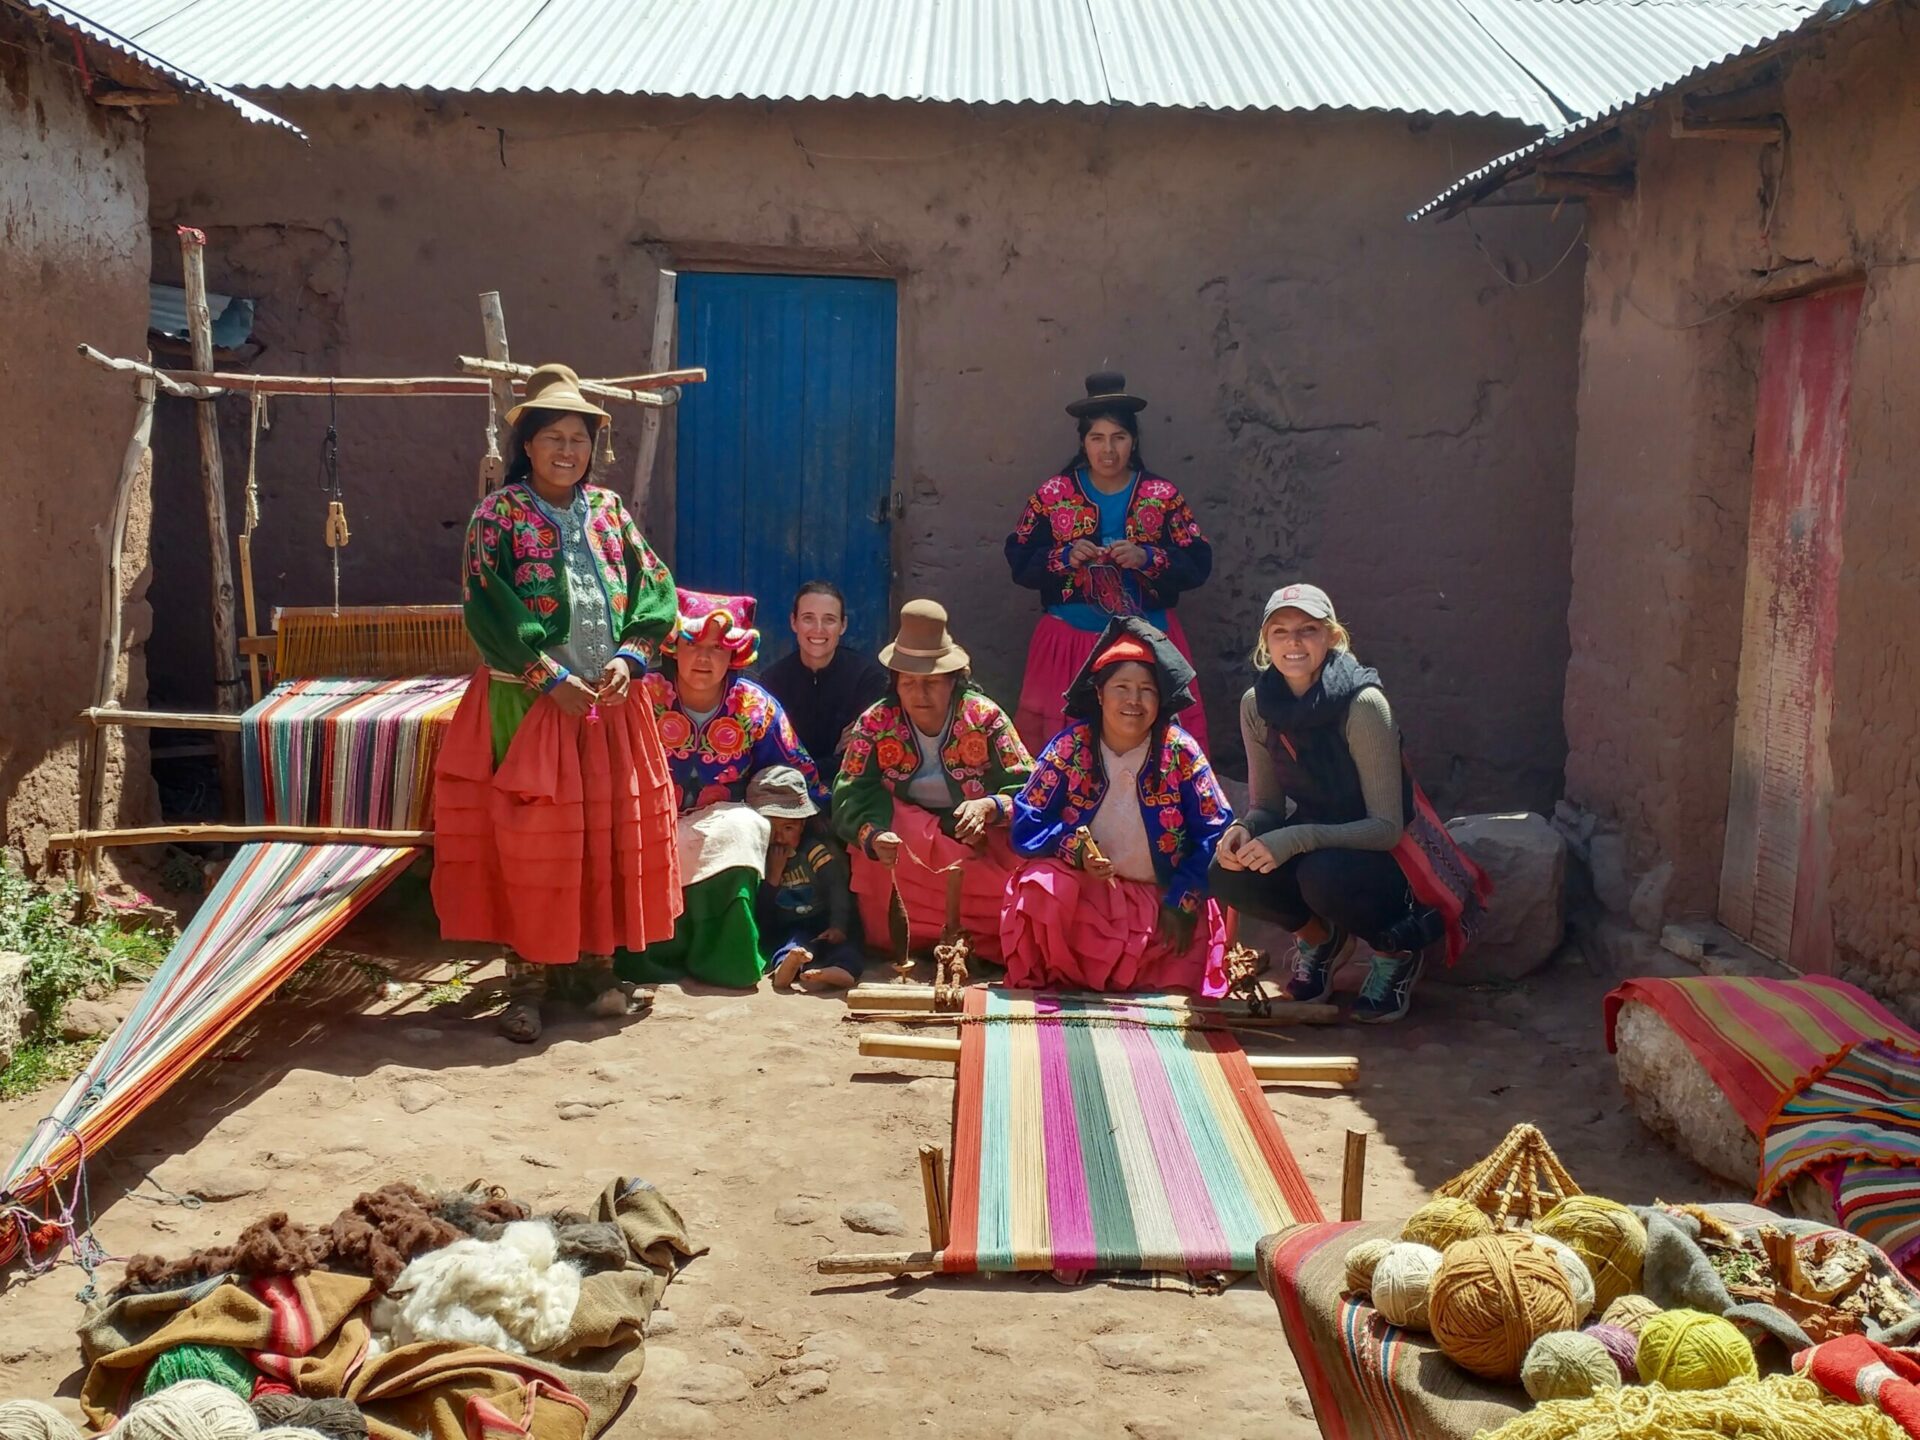 Peru locals visited on our cultural travel safari